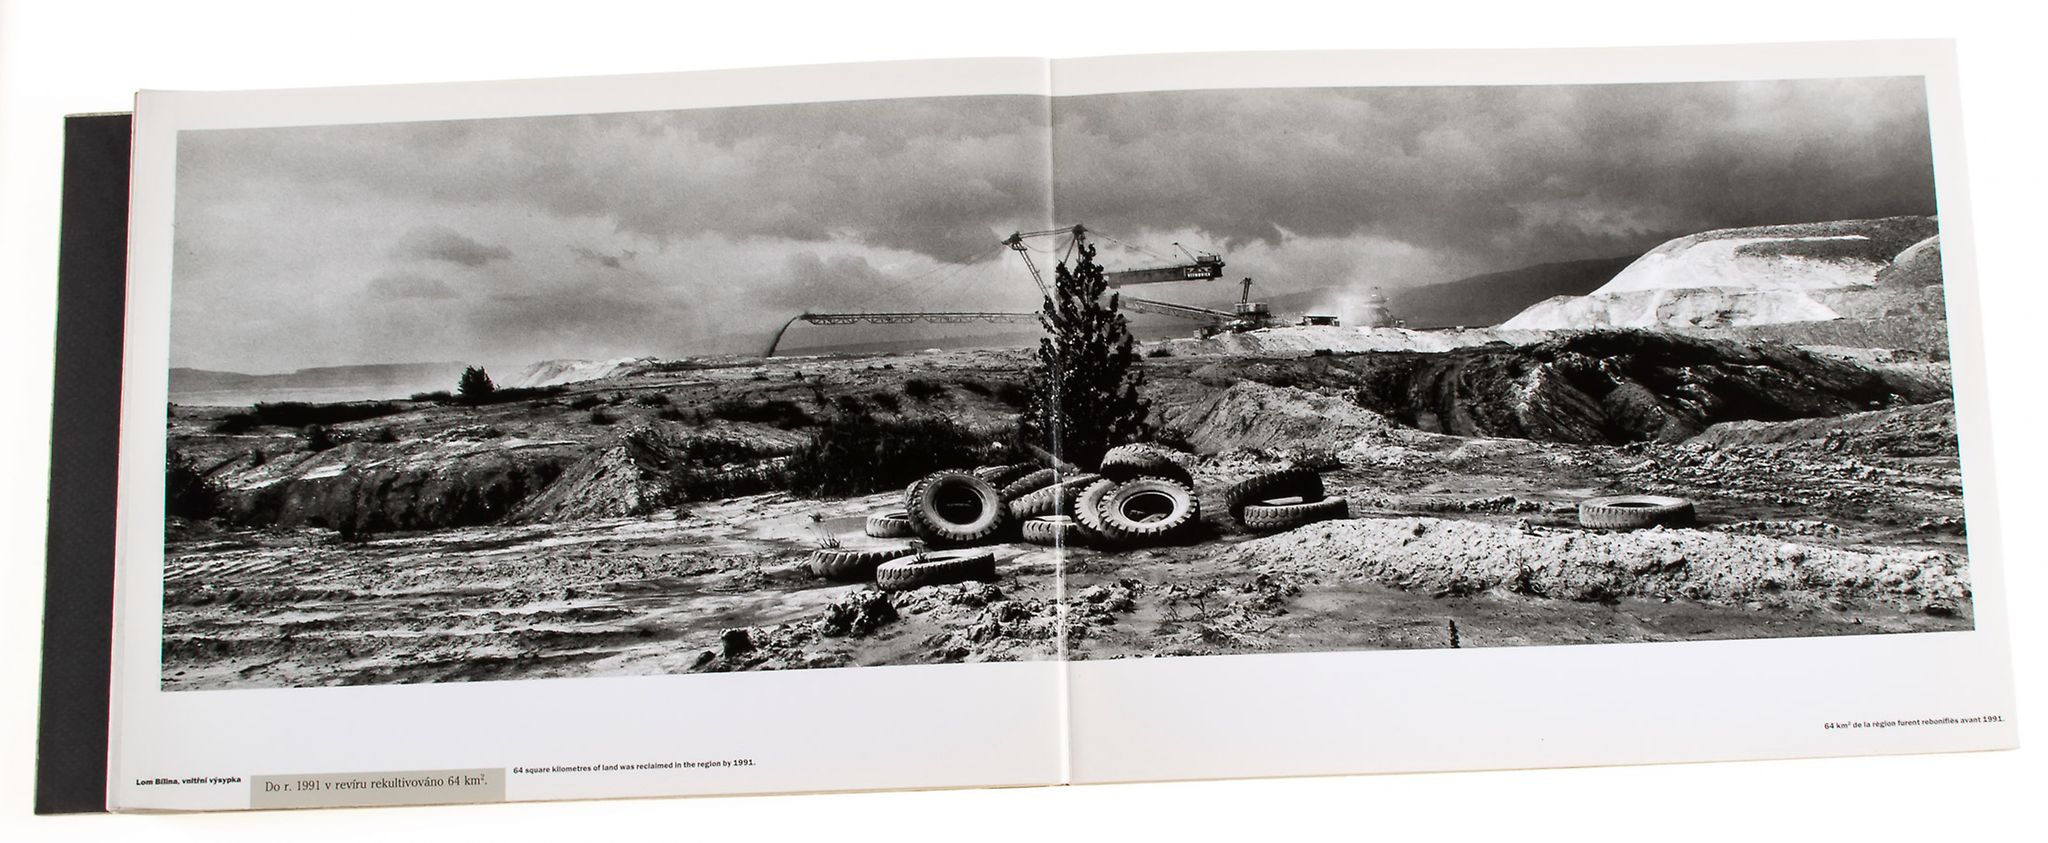 Josef Koudelka (b.1938) - The Black Triangle, 1994 Josef Koudelka - Magnum Photo, Czech Republic, - Image 2 of 2